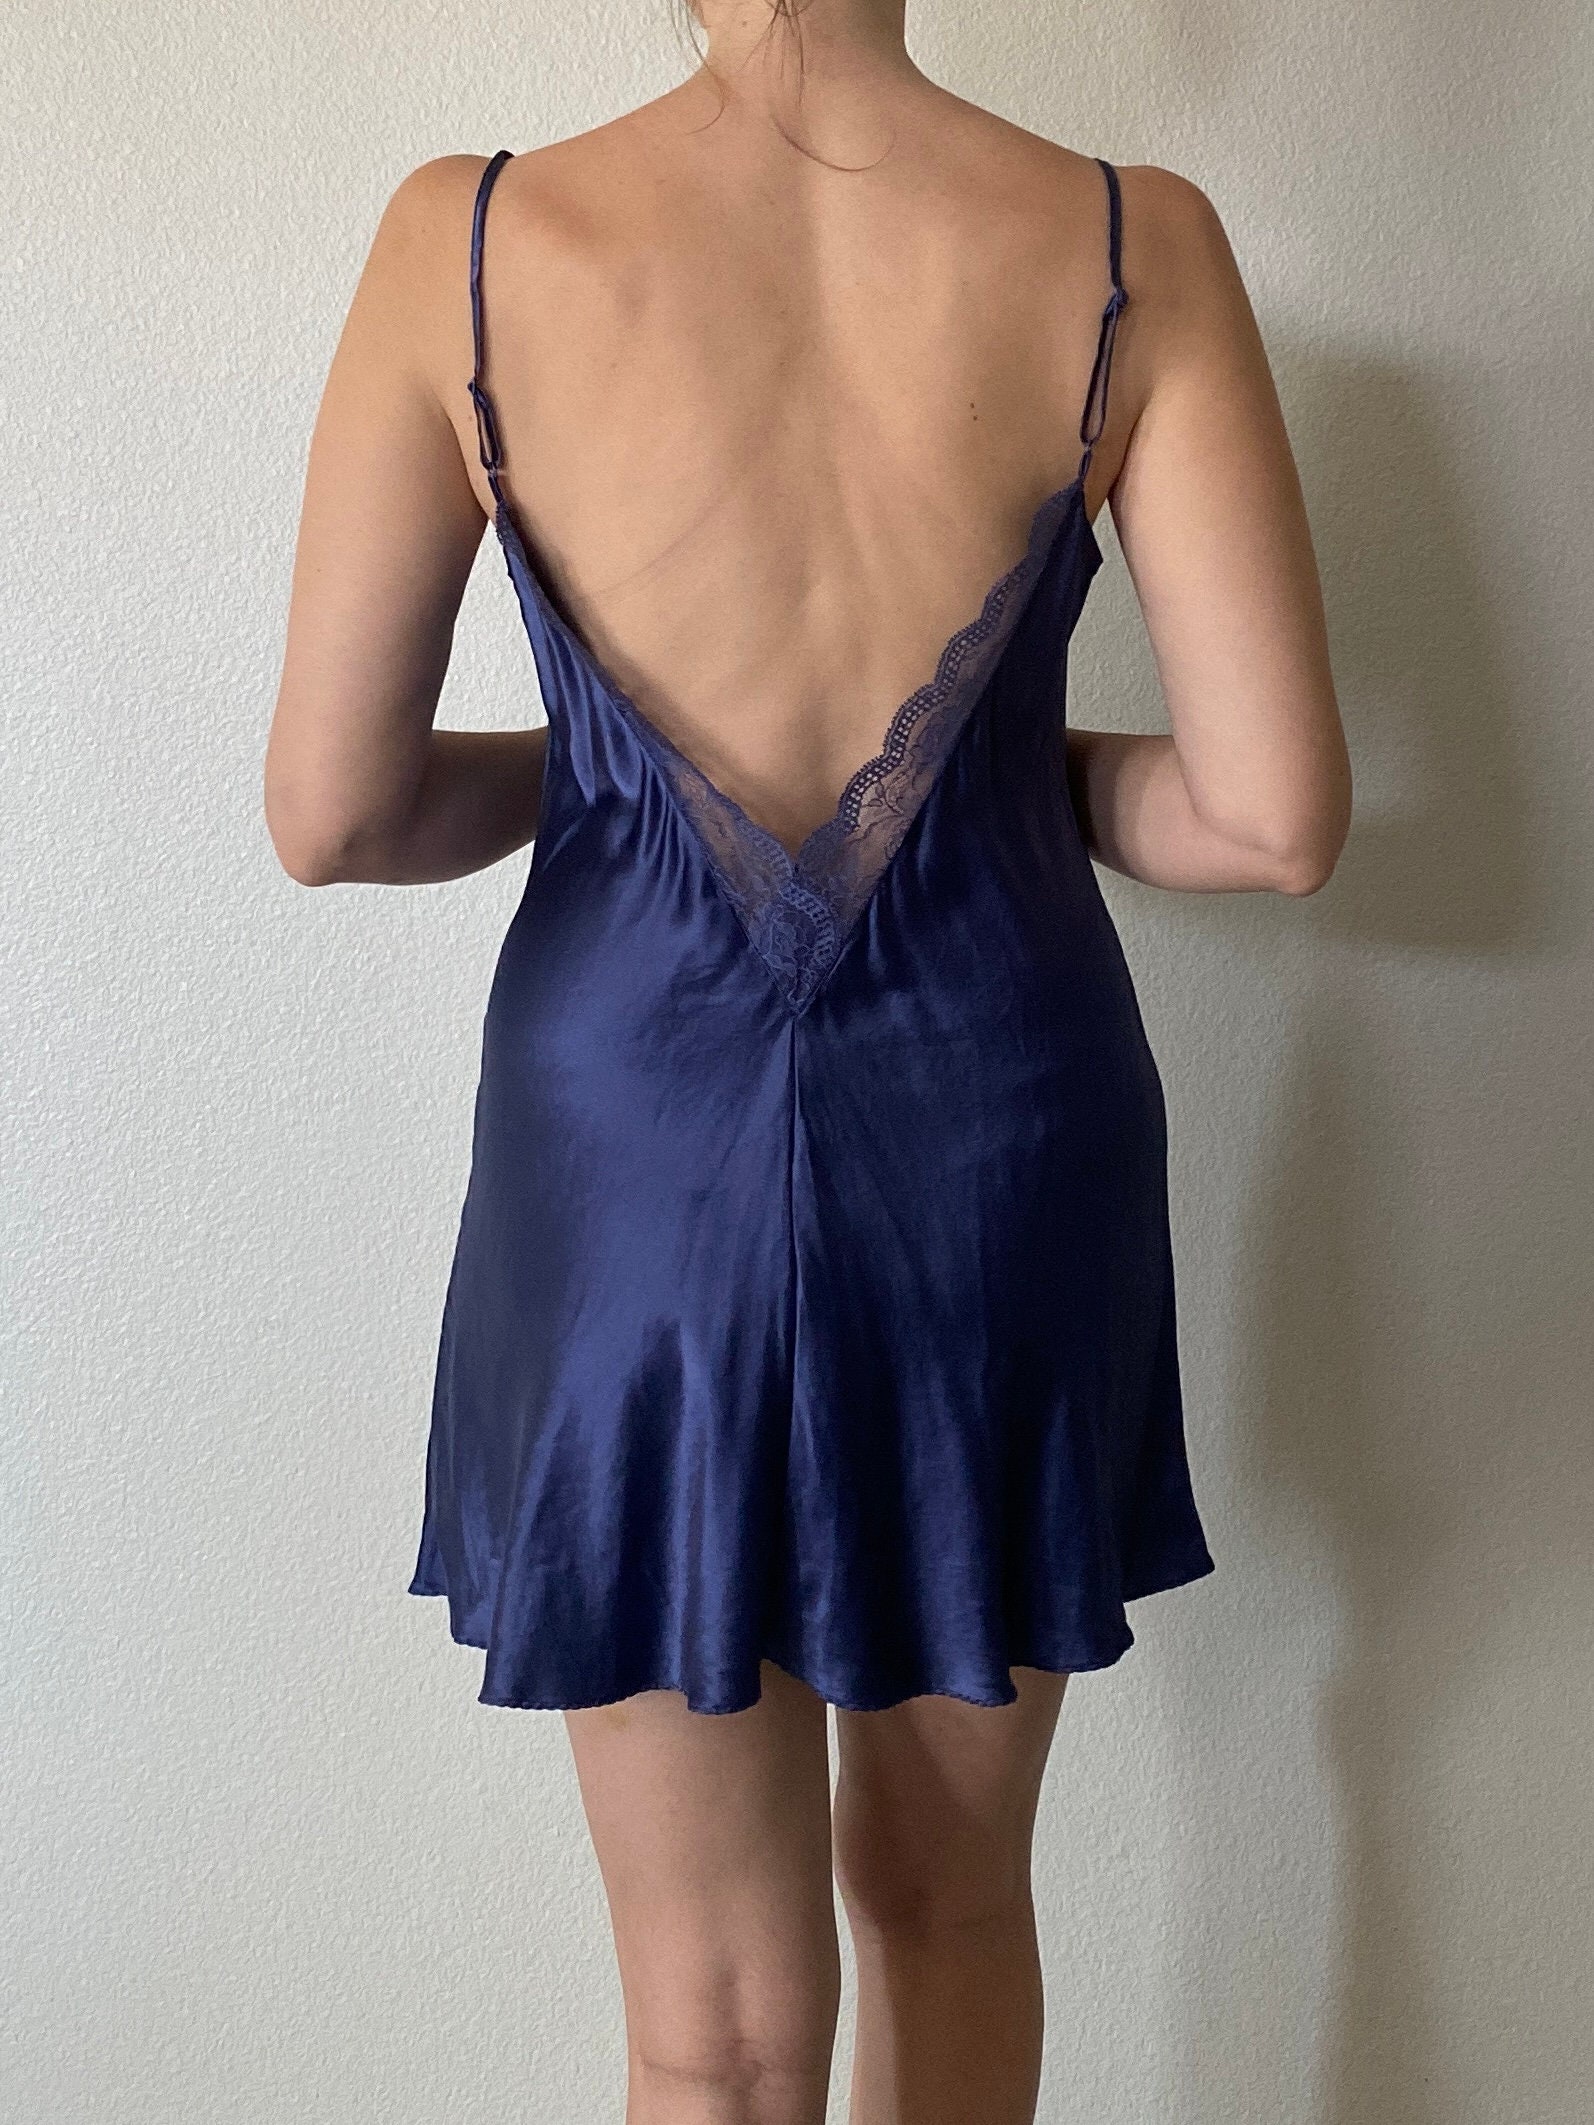 Vintage 100% Silk Victorias Secret Blue Lace Chemise Nightie Nightgown Slip  Medium 